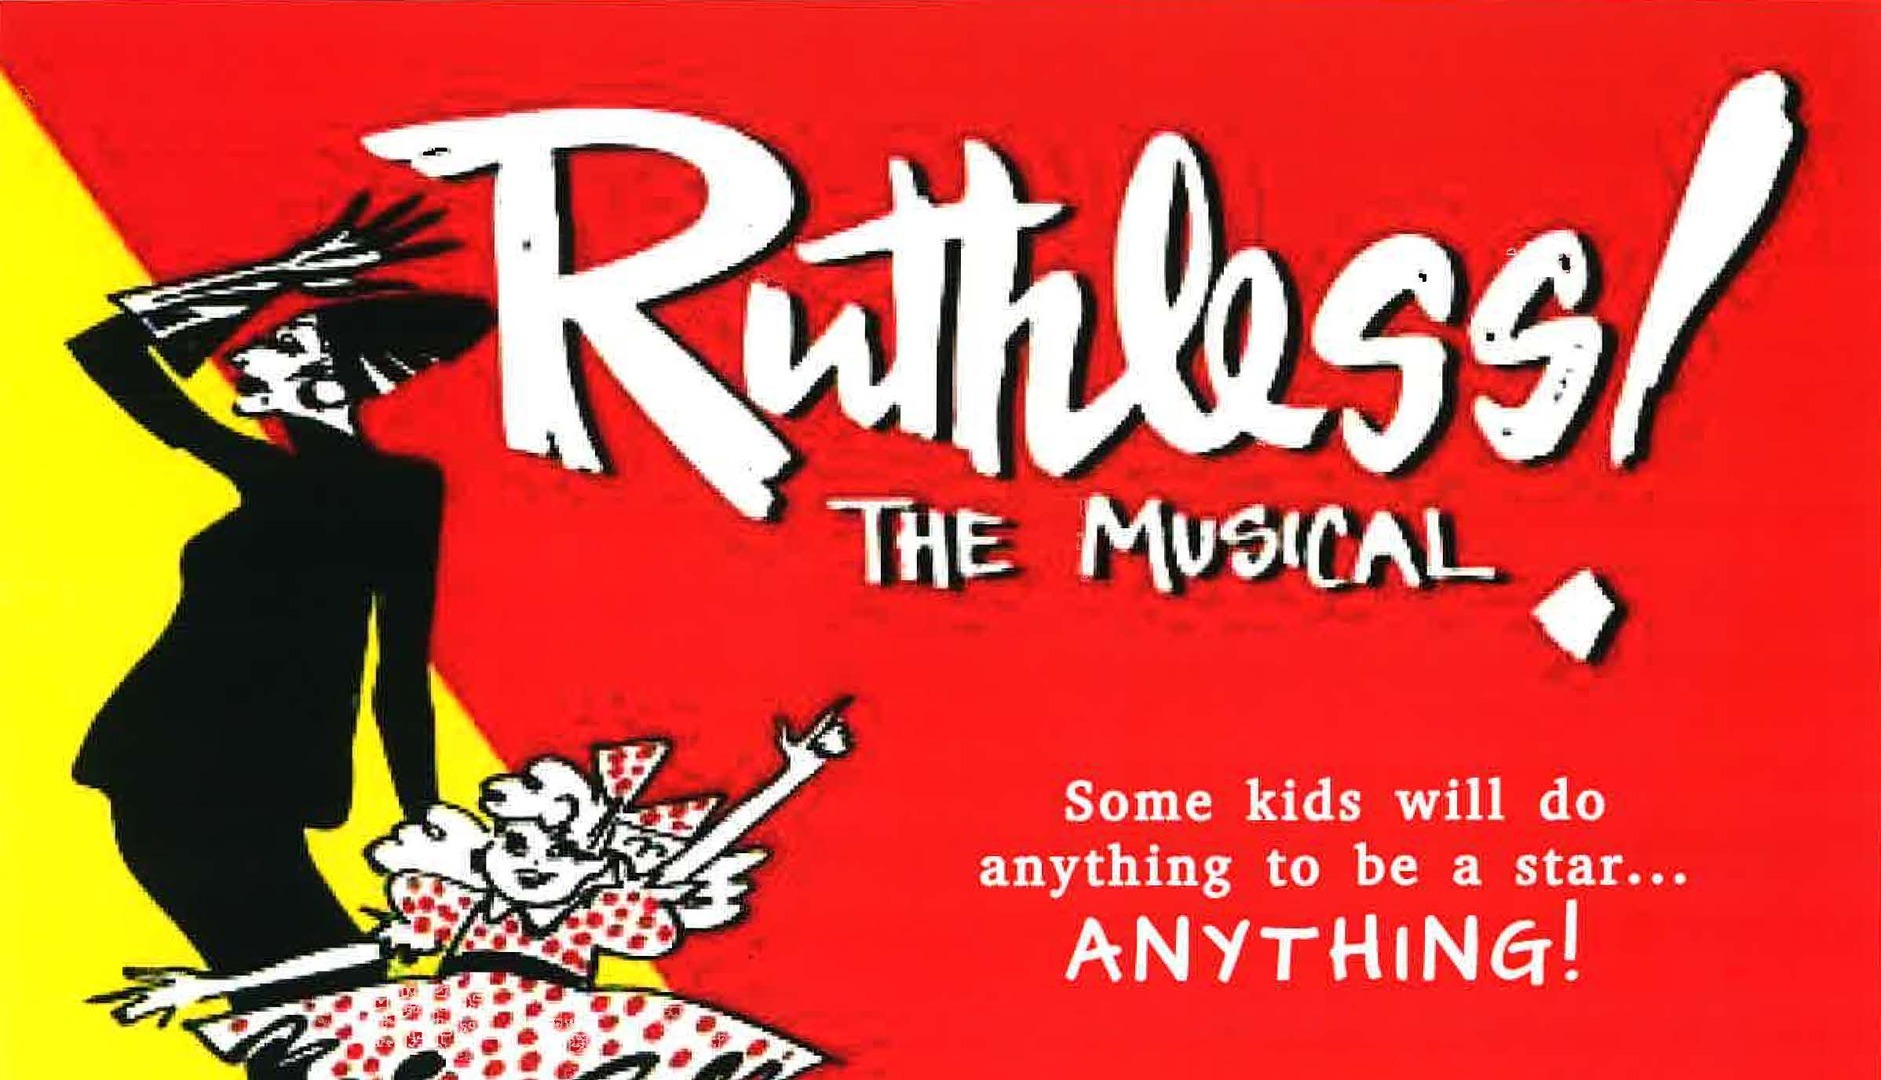 Triad Pride Acting Company presents "Ruthless, the Musical" May 10th at 8pm, Greensboro, North Carolina, United States